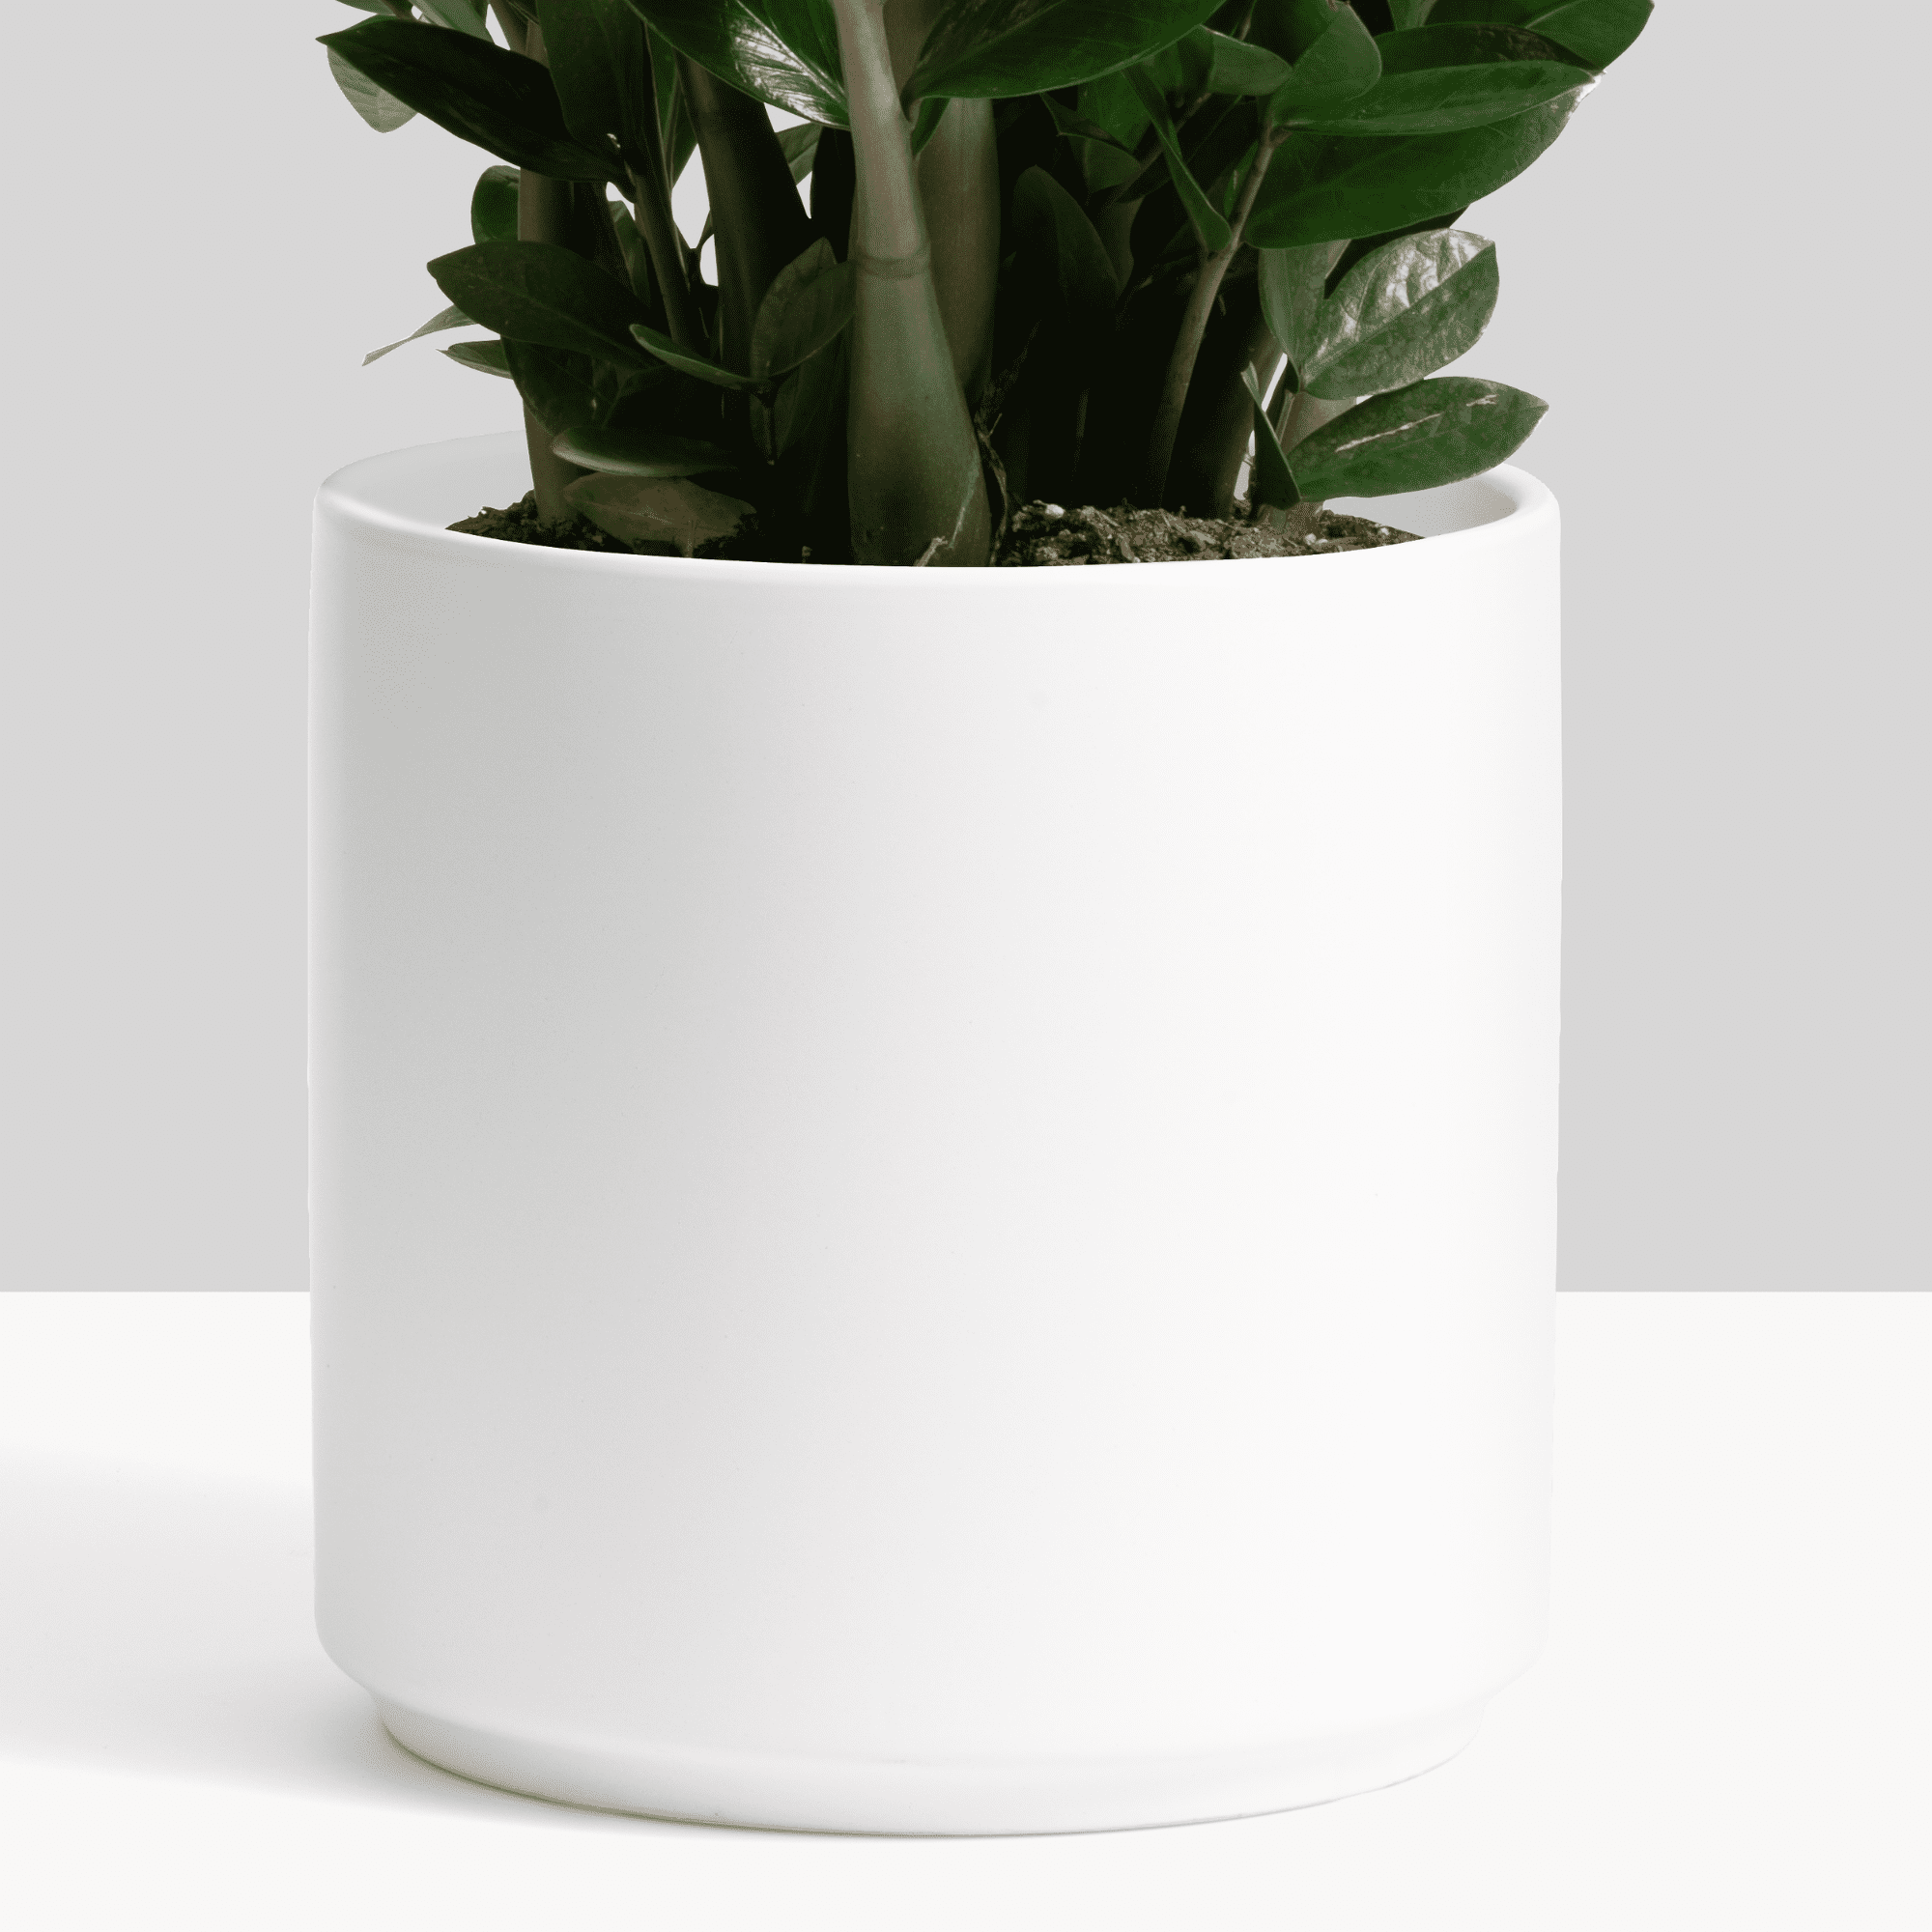 15cm Ceramic Pebble White Planter with Artificial Succulent Plant